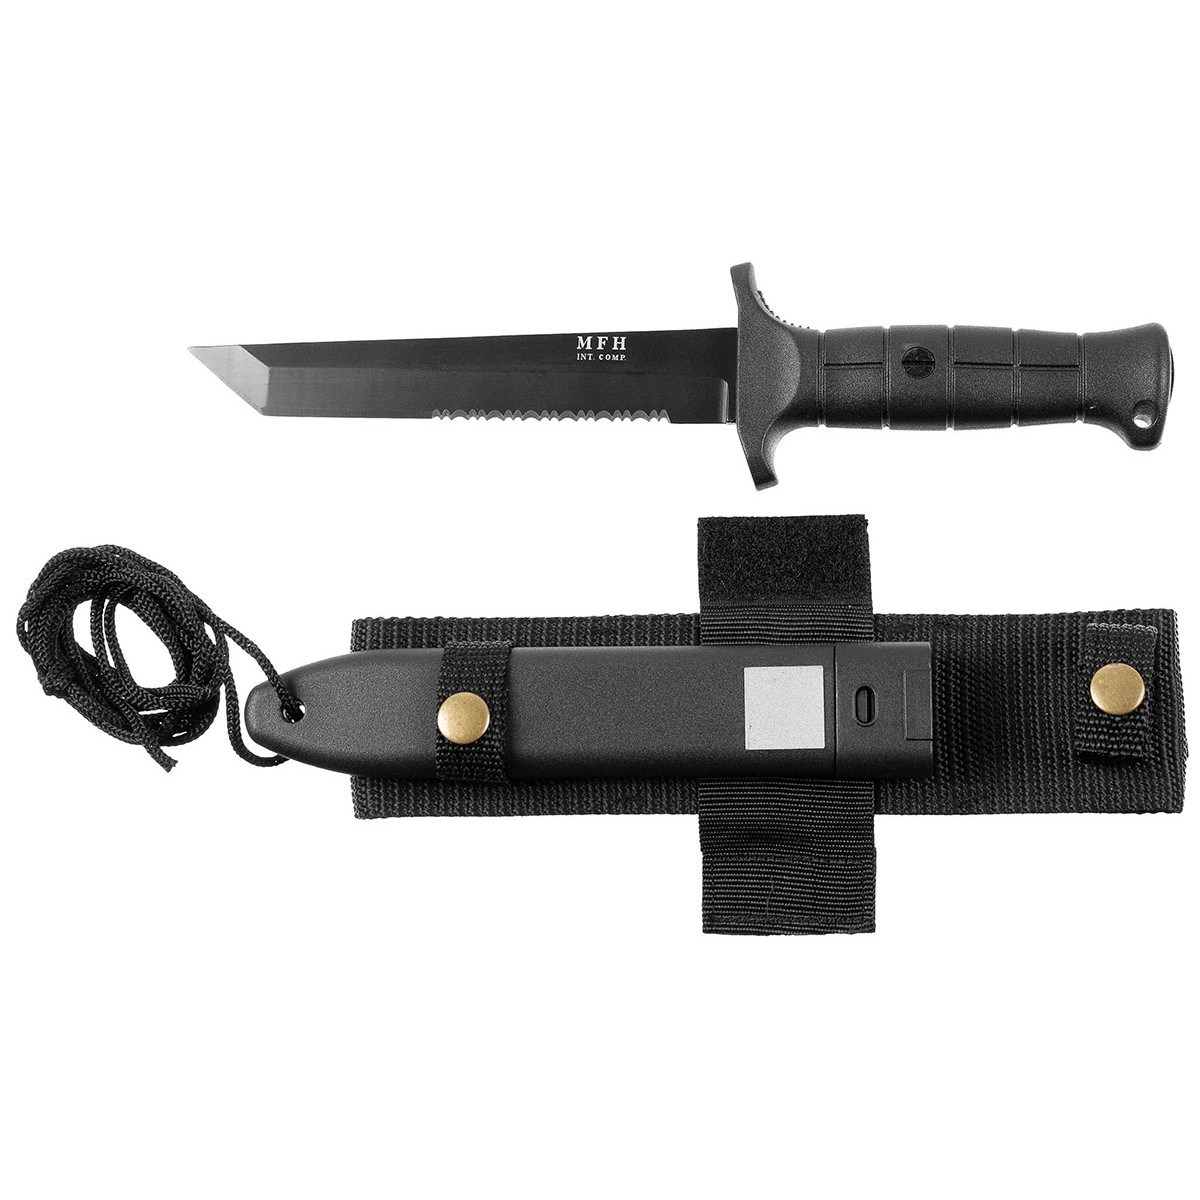 Combat Knife typ KM2000 with plastic / nylon holster BLACK MFH int. comp. 44133 L-11